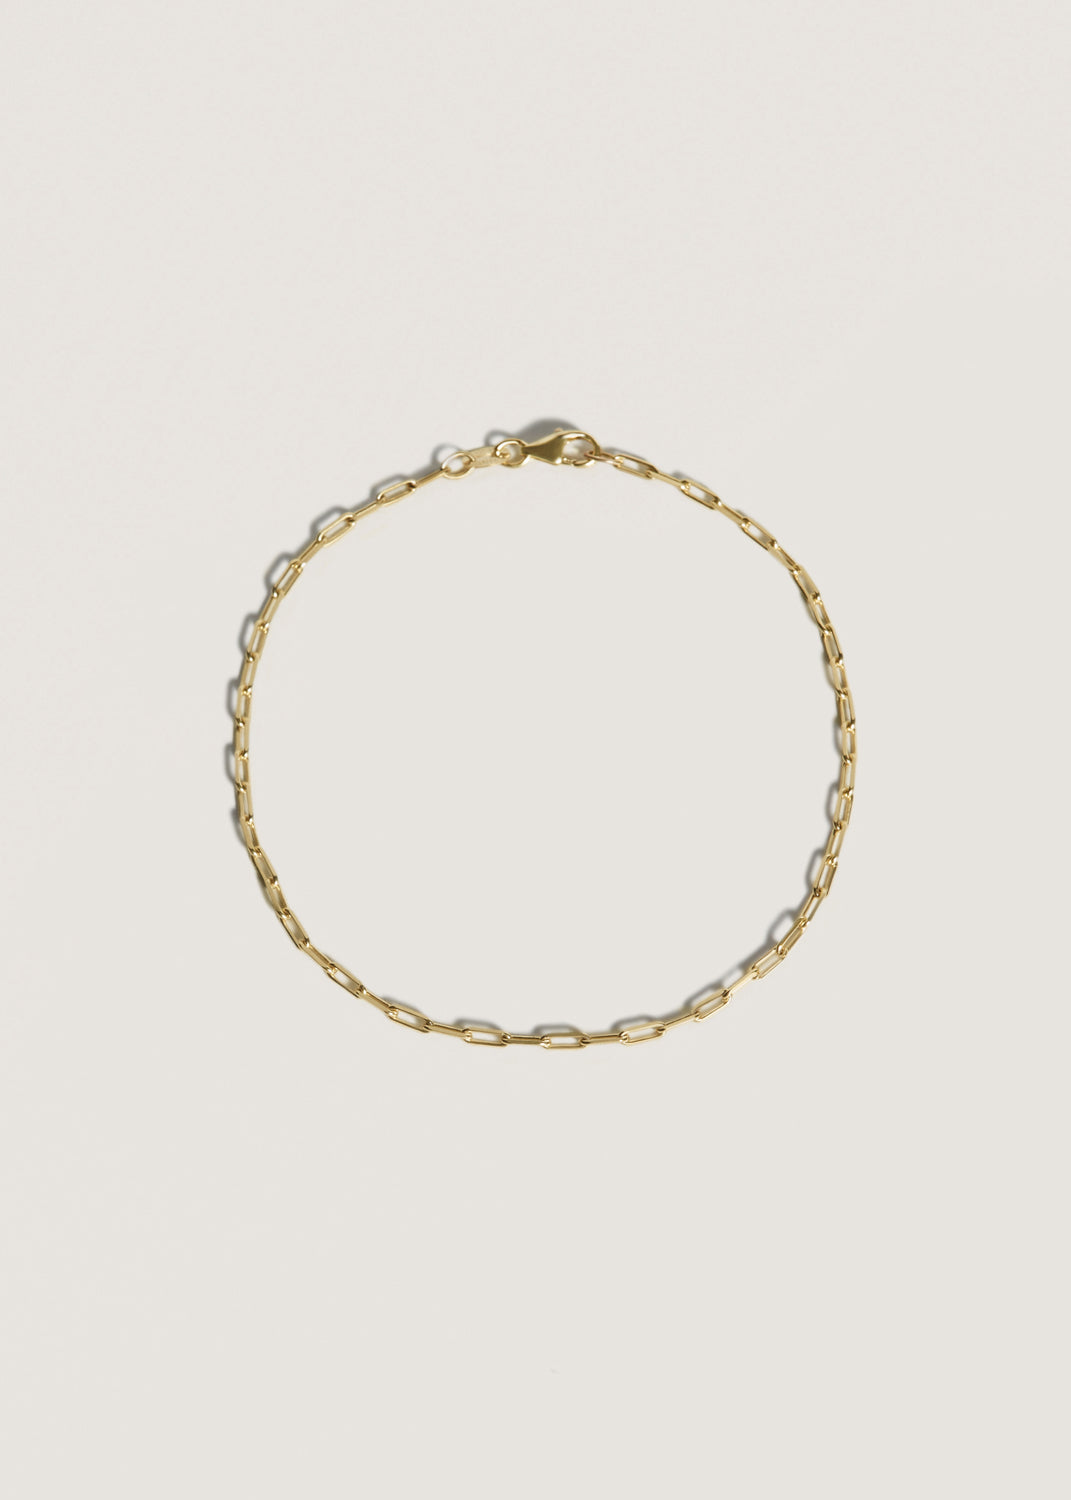 alt="Micro Link Chain Bracelet"